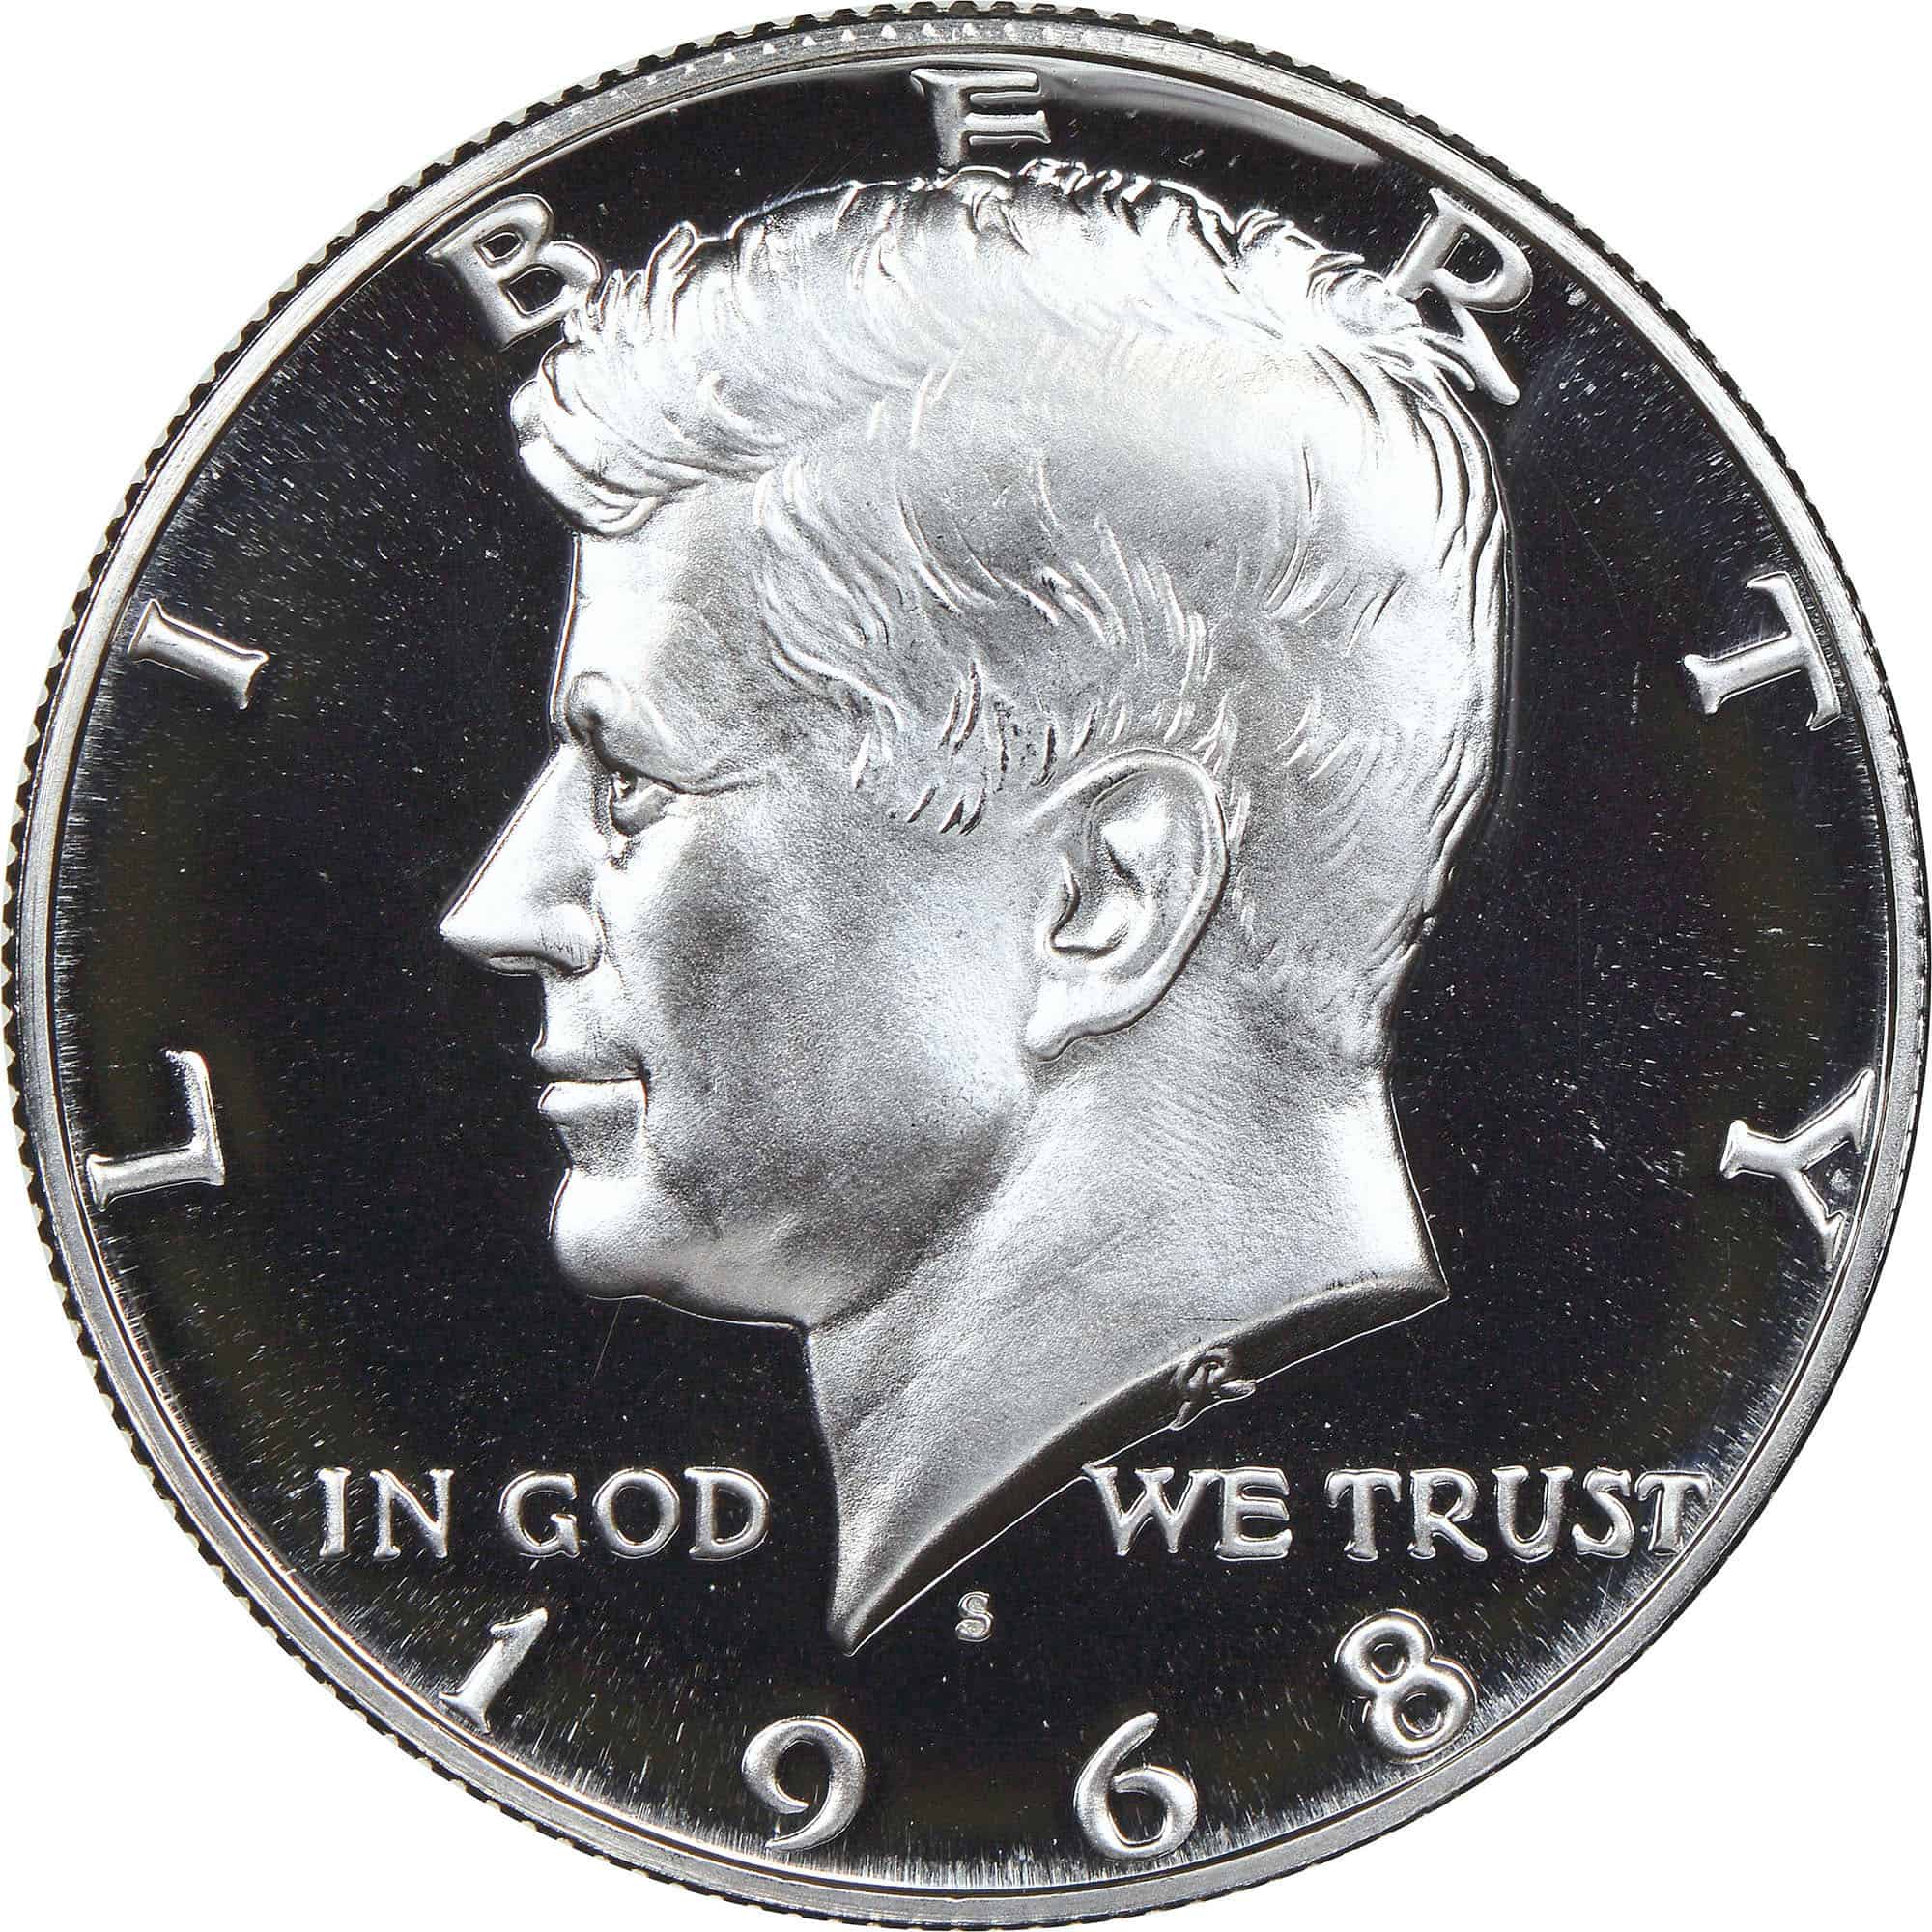 1968 S Mint Mark Half Dollar Value